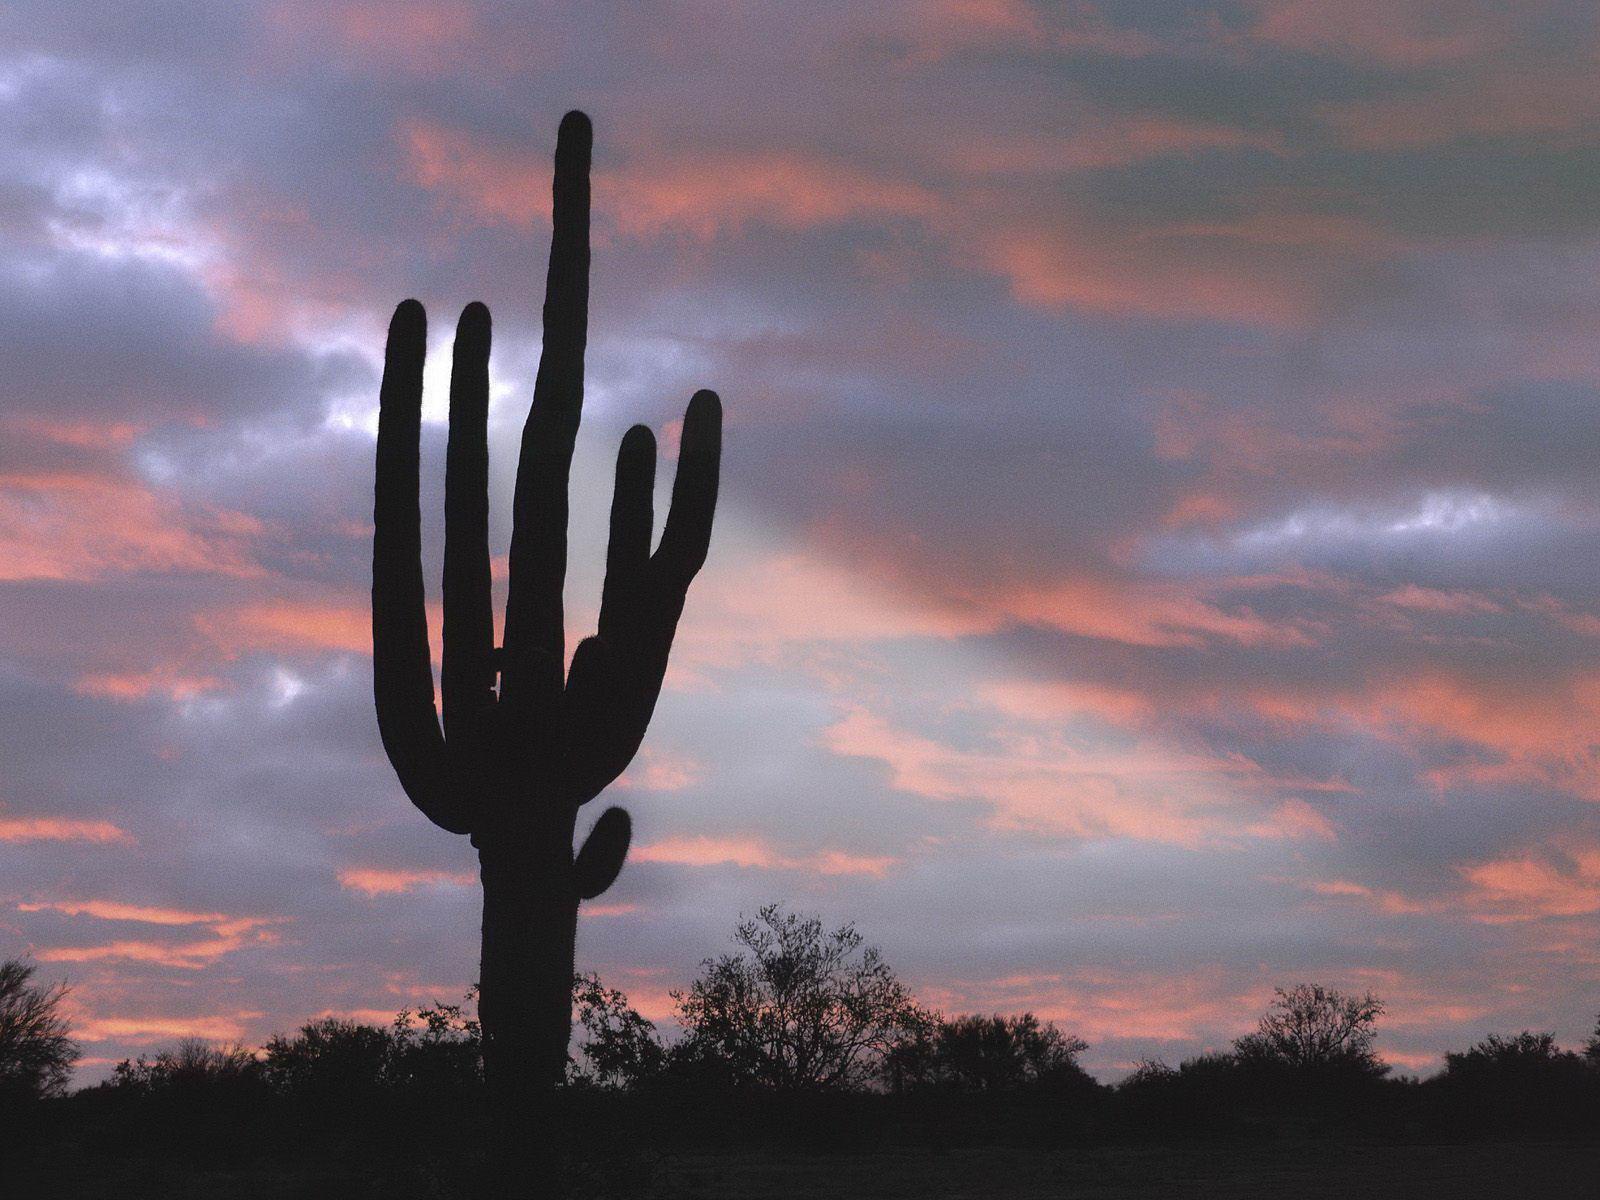 Giant Saguaro Cactus Arizona free desktop background